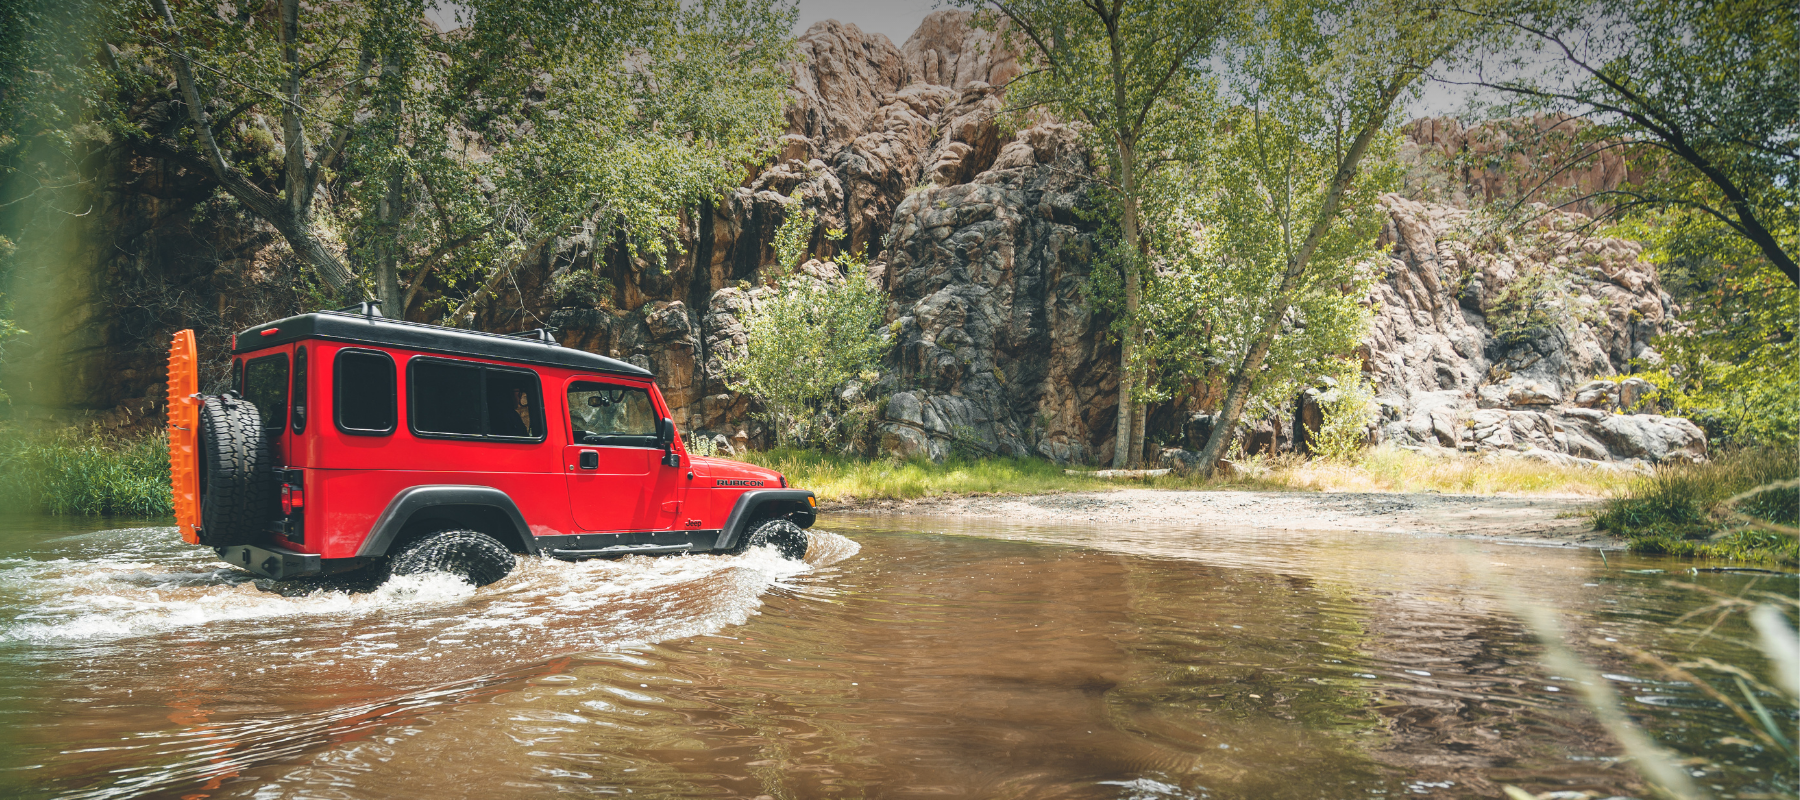 Safari Jeep Rubicon LJ with Gr8tops In Water Crossing